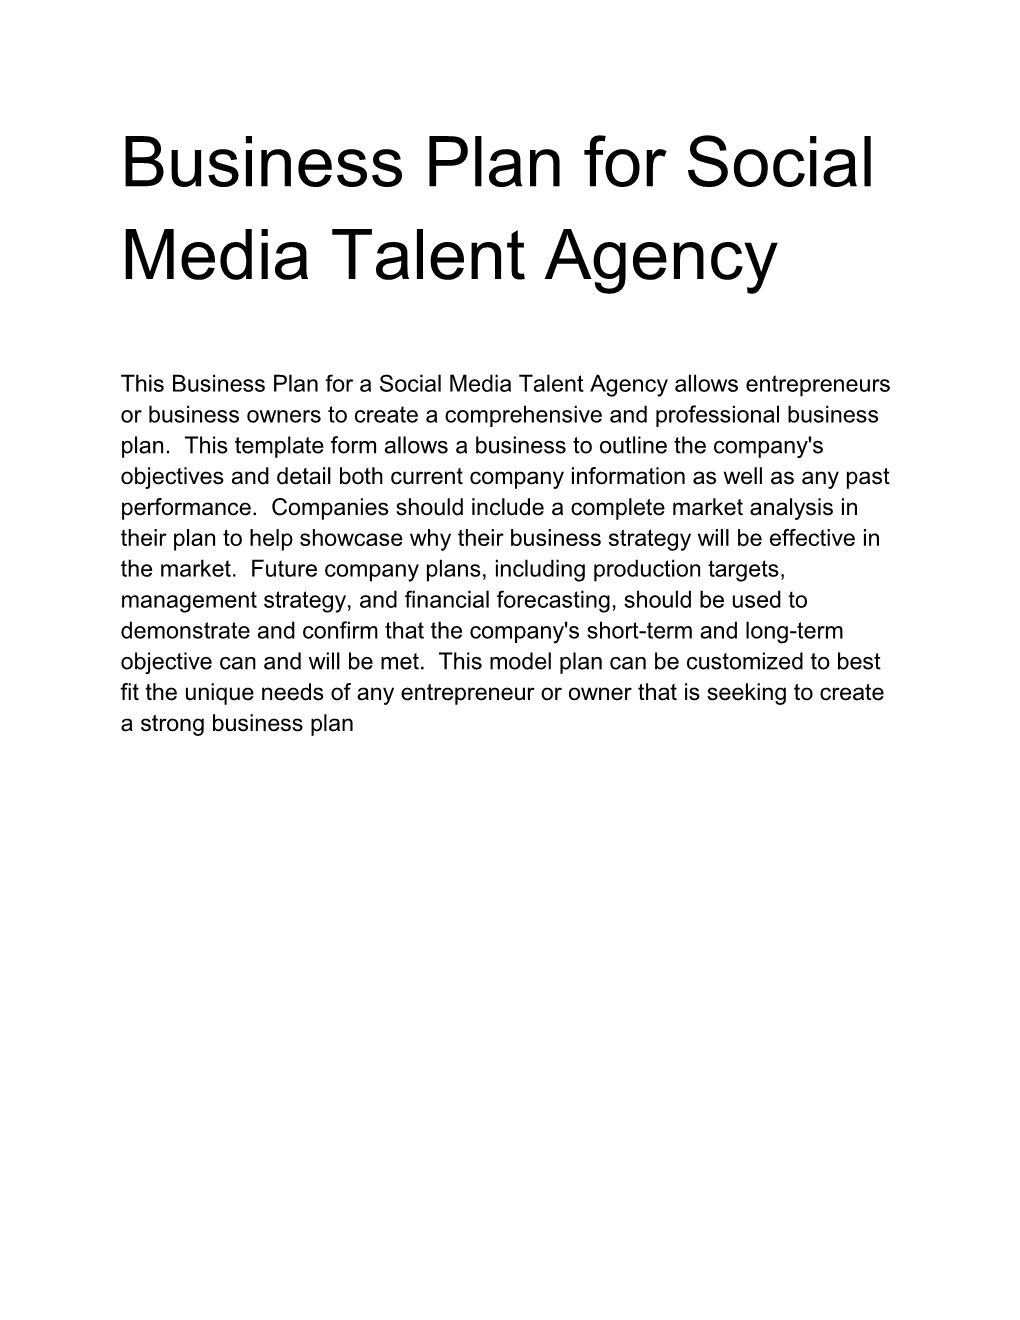 Business Plan for Social Media Talent Agency